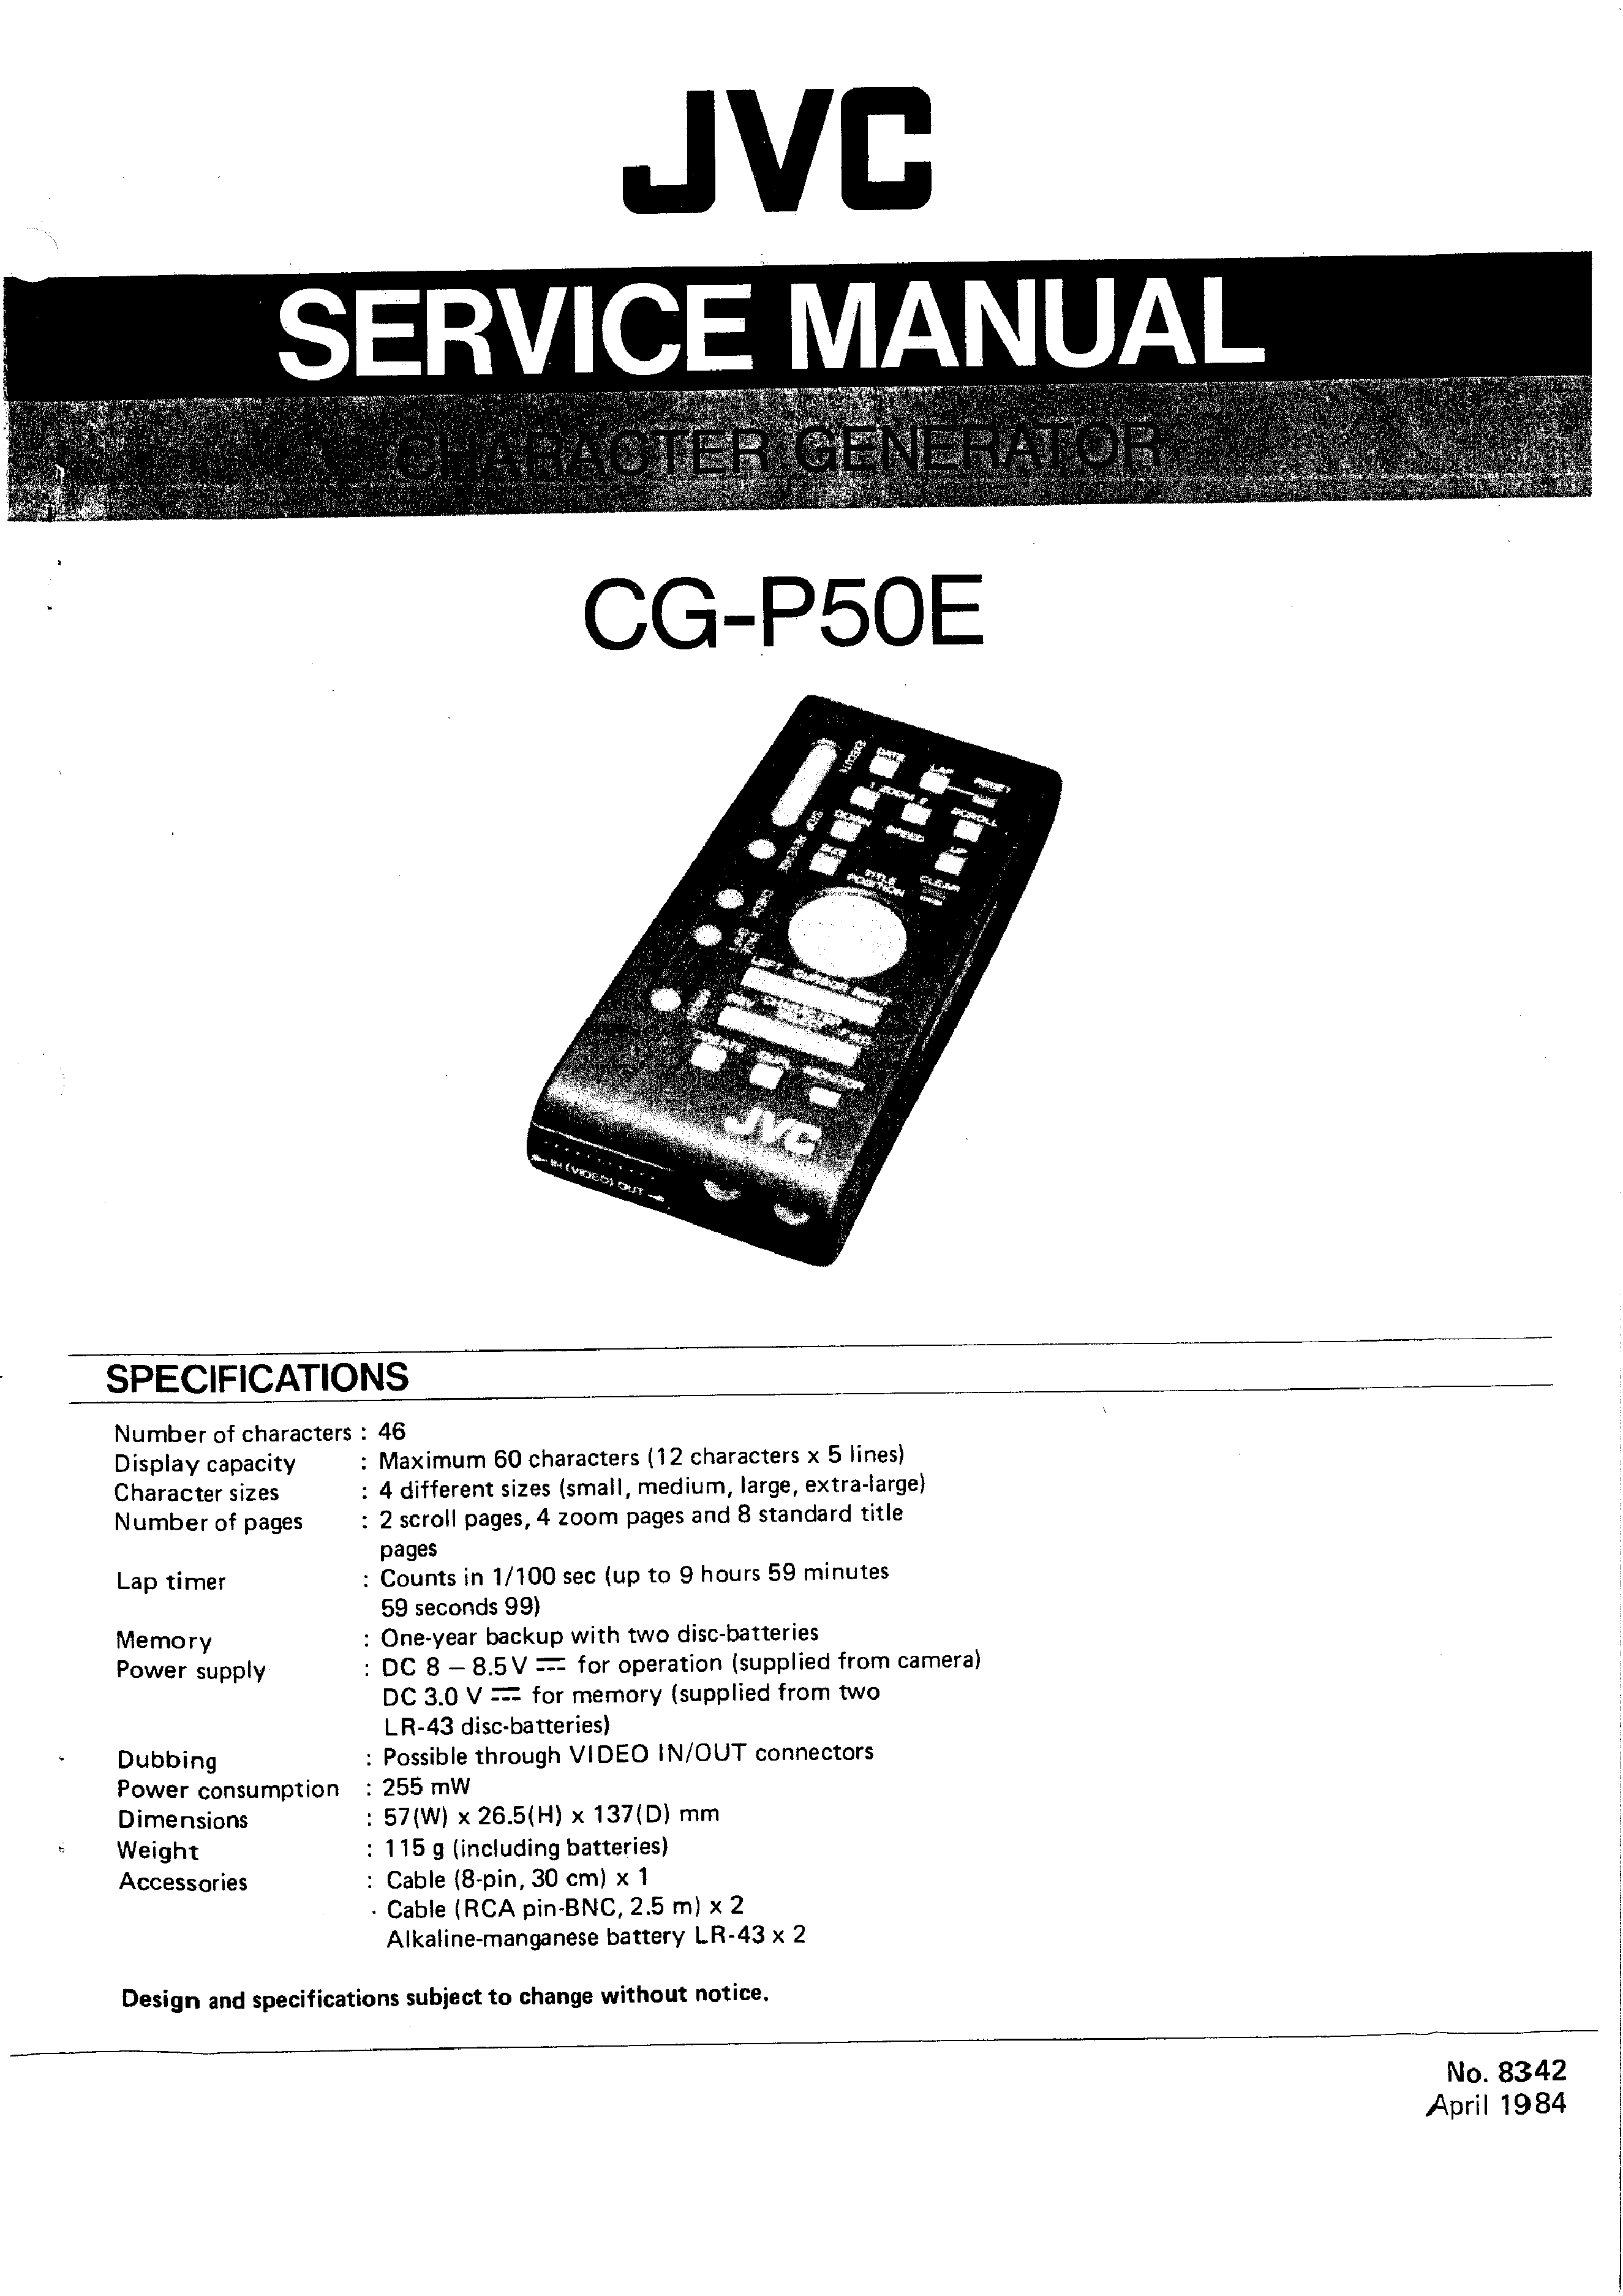 to understand Loudspeaker Commerce JVC CG-P50E - Service Manual Immediate Download